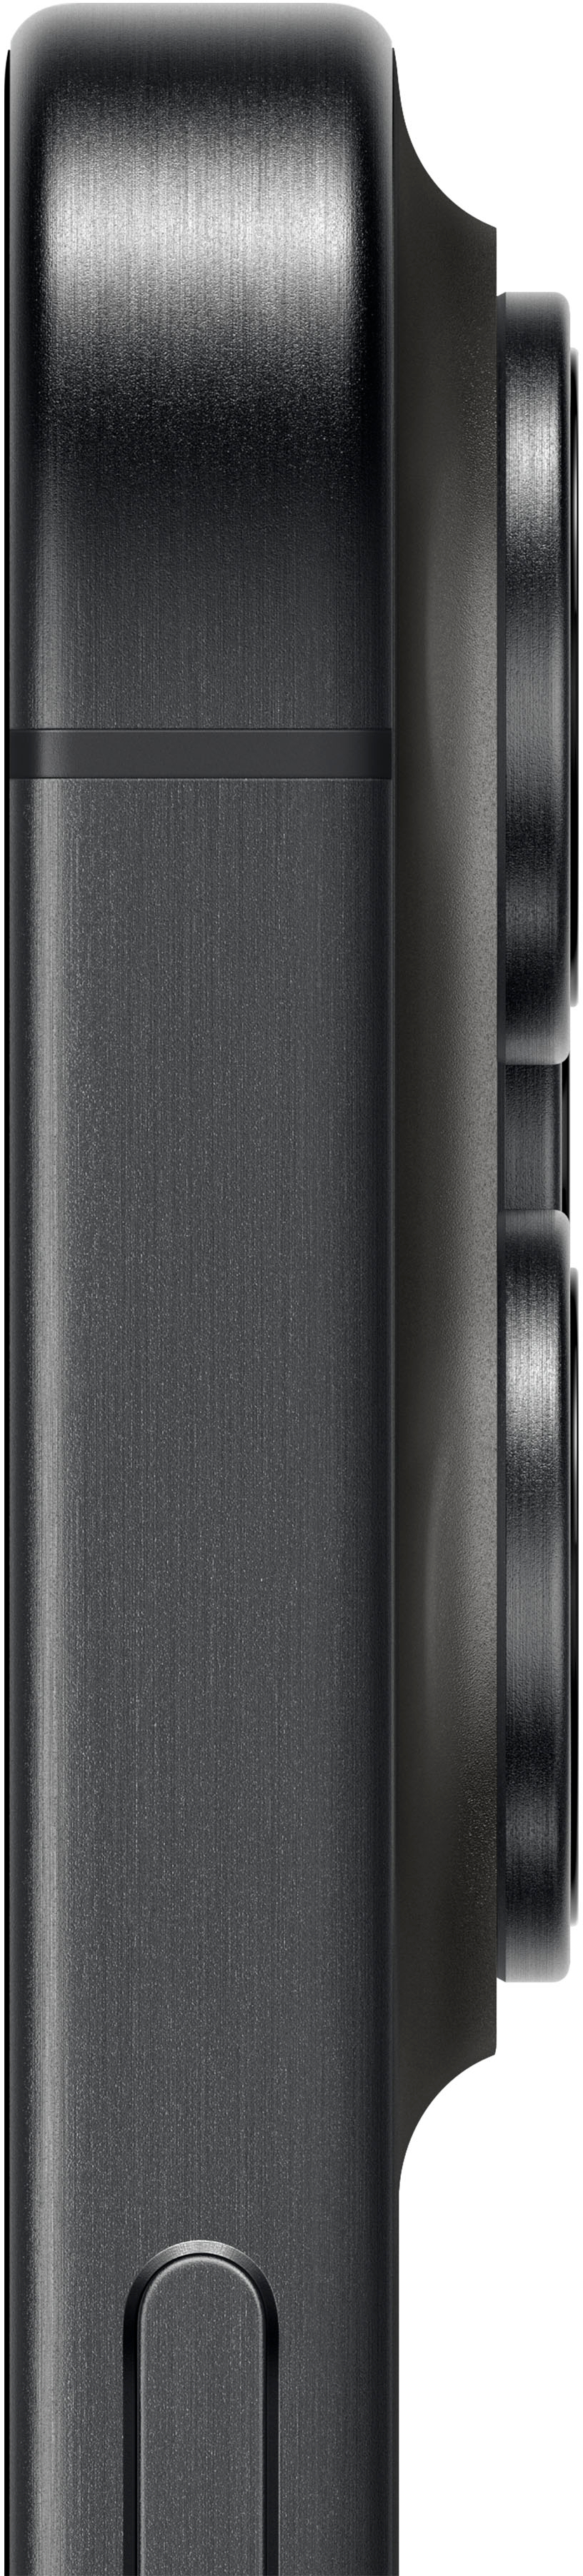 Apple iPhone 15 Pro 128GB Black Titanium (Verizon) MTQM3LL/A - Best Buy